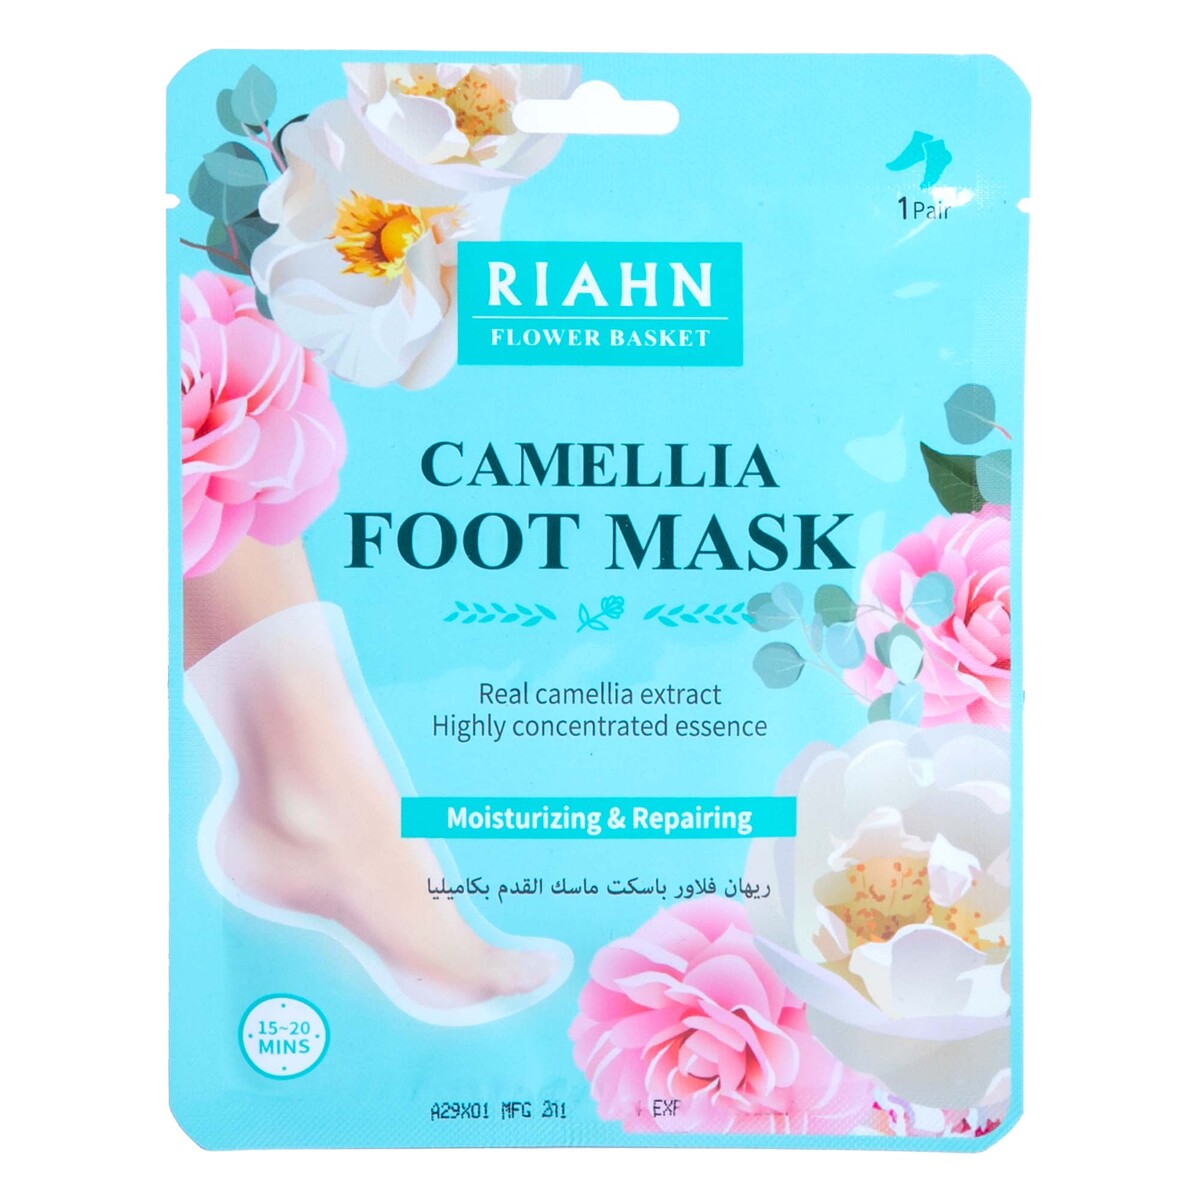 Riahn Flower Basket Camellia Foot Mask, 16 g